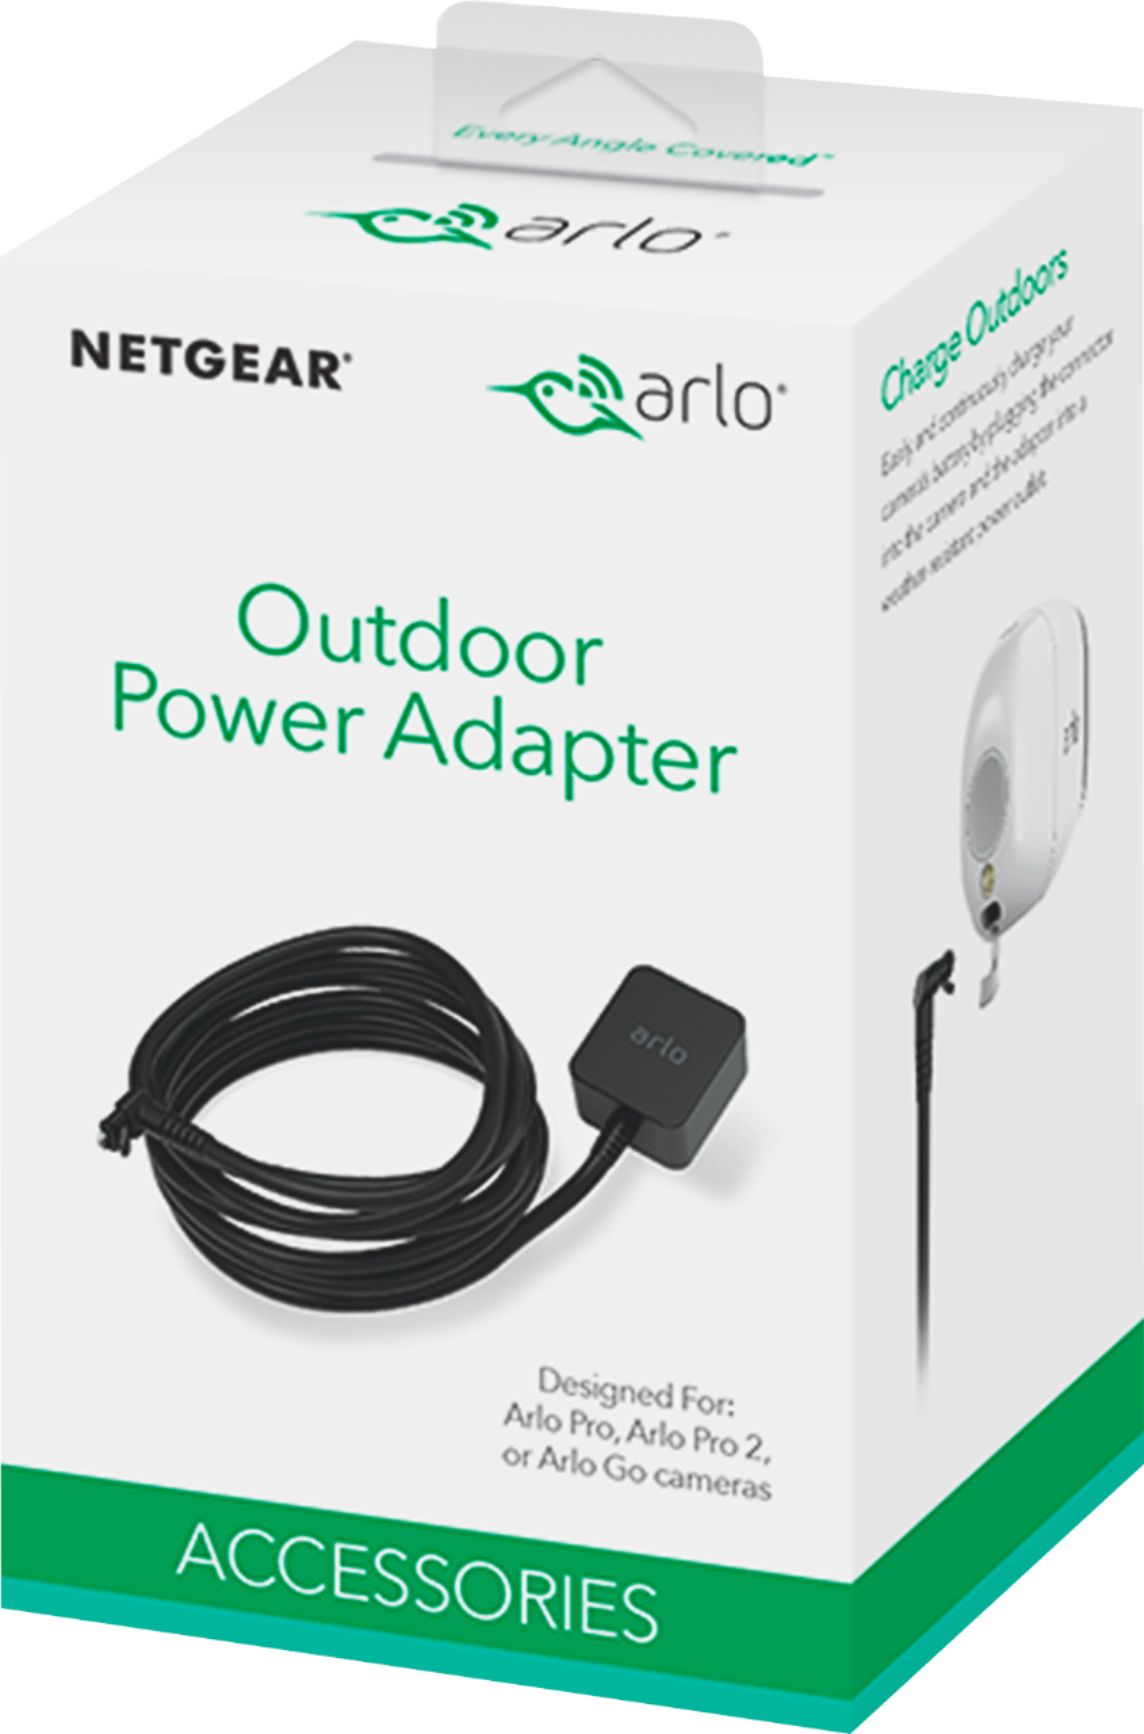 Outdoor Power AdapterNo charging neededCompa... Arlo Certified Accessory 